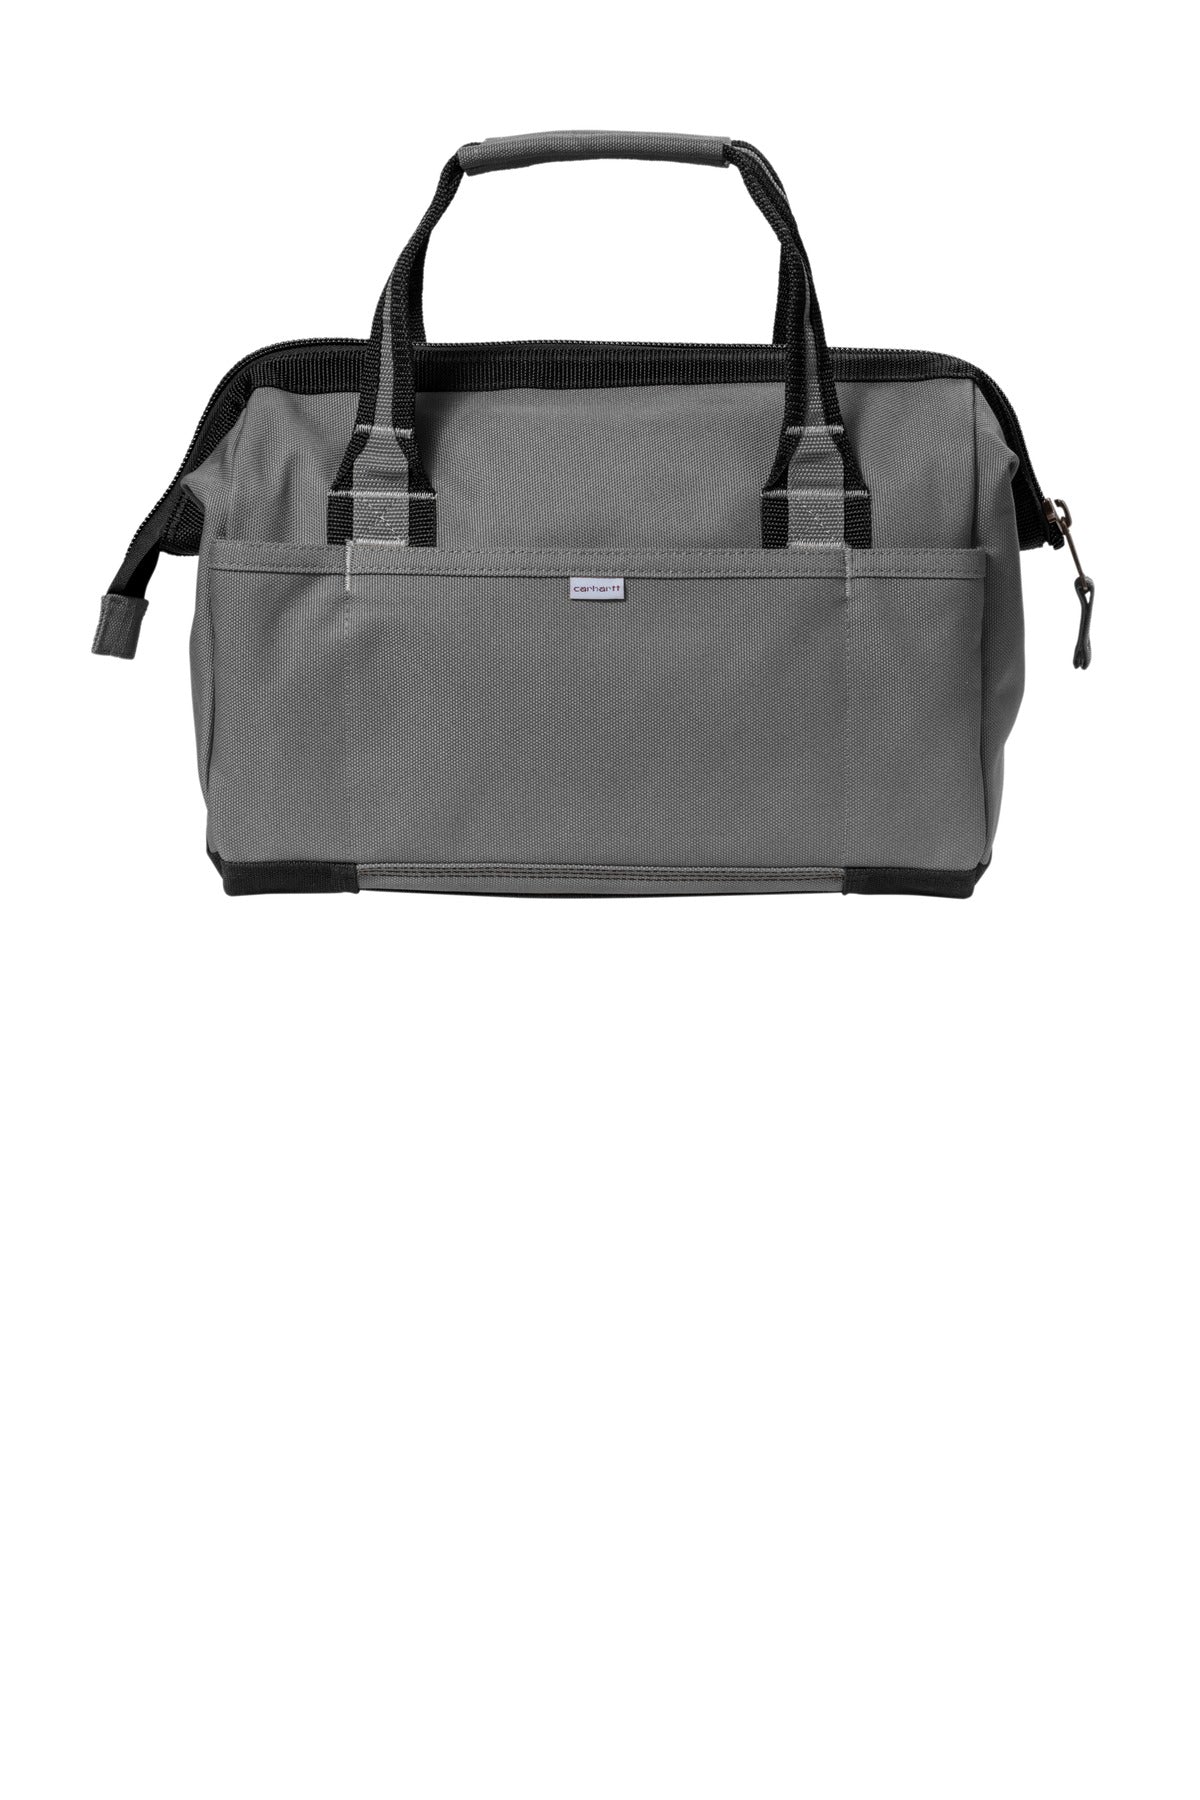 Carhartt  Foundry Series 14  Tool Bag. CT89240105